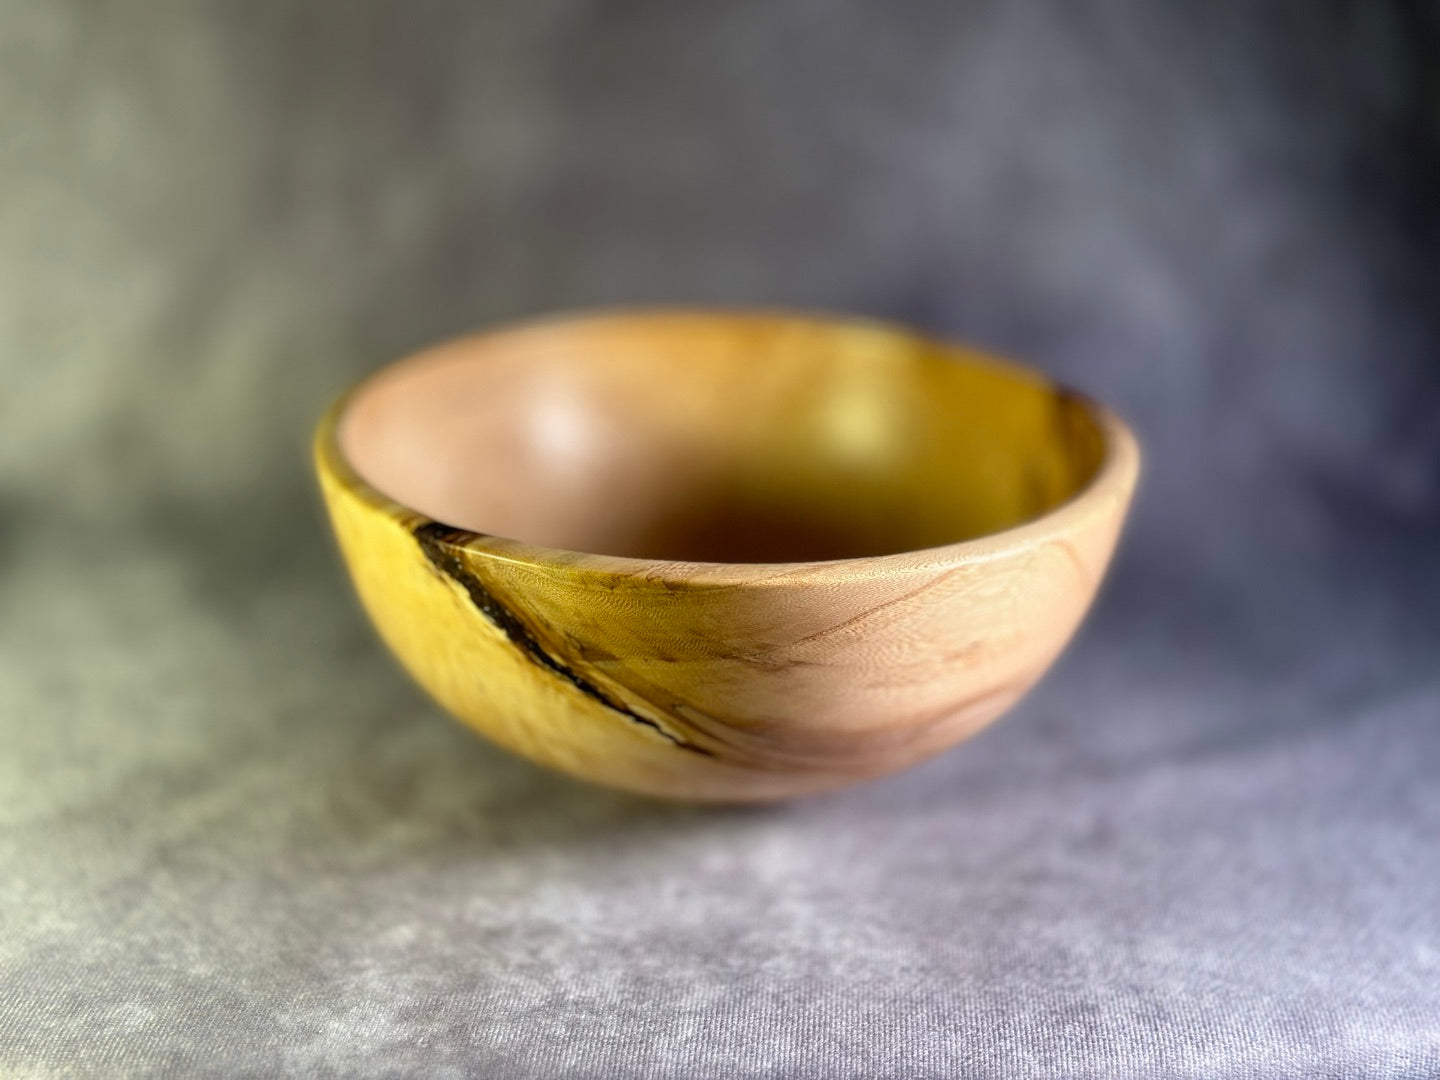 Medium Elm Bowl - Rare Earth Bowls